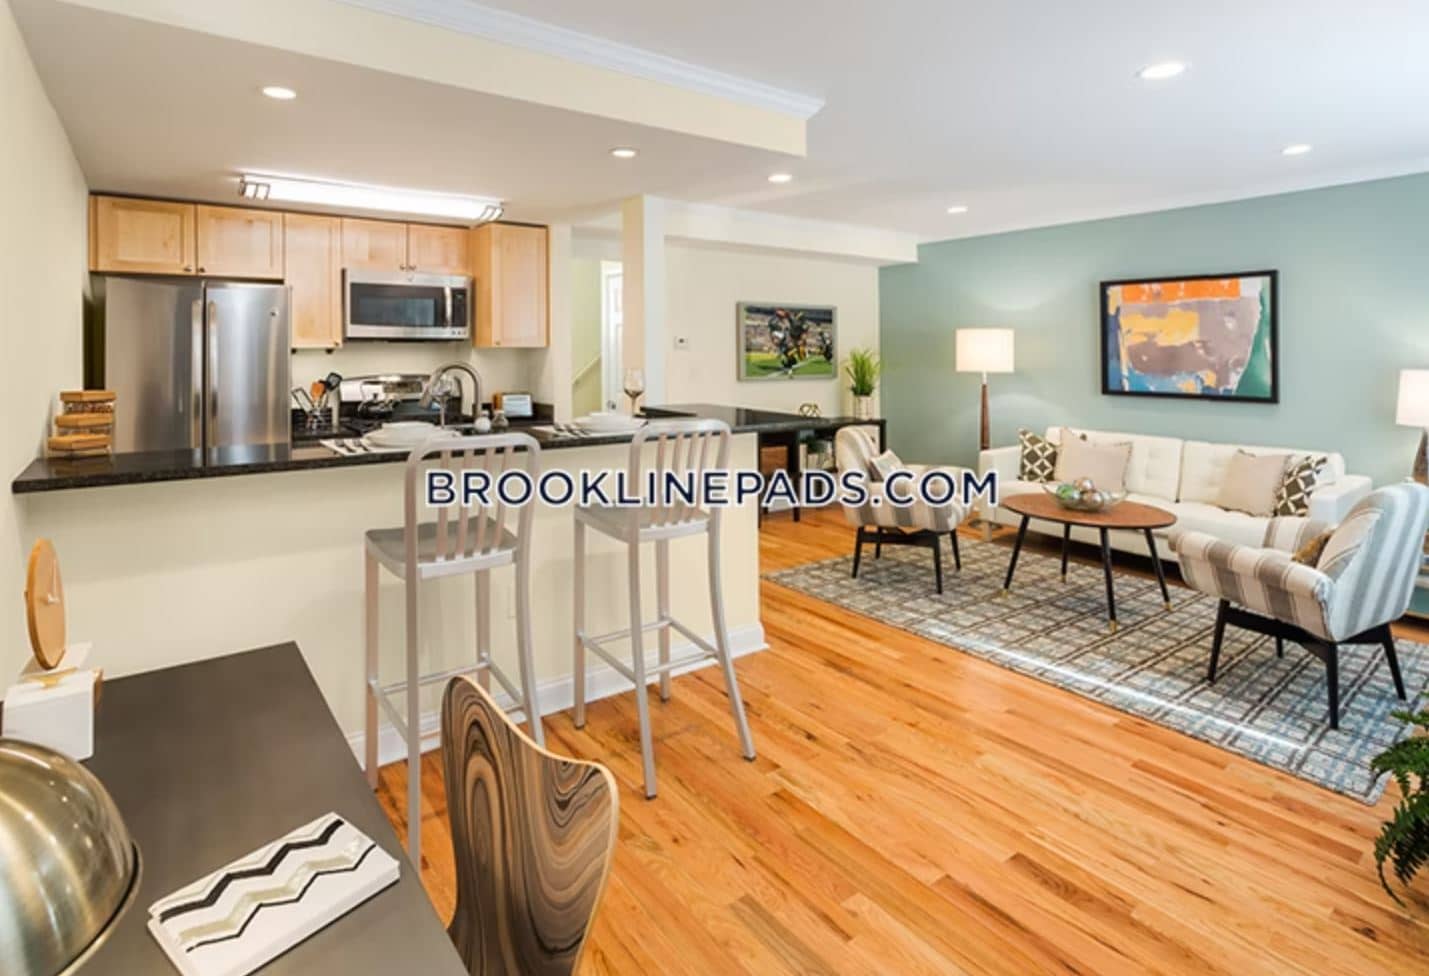 Brookline apartments